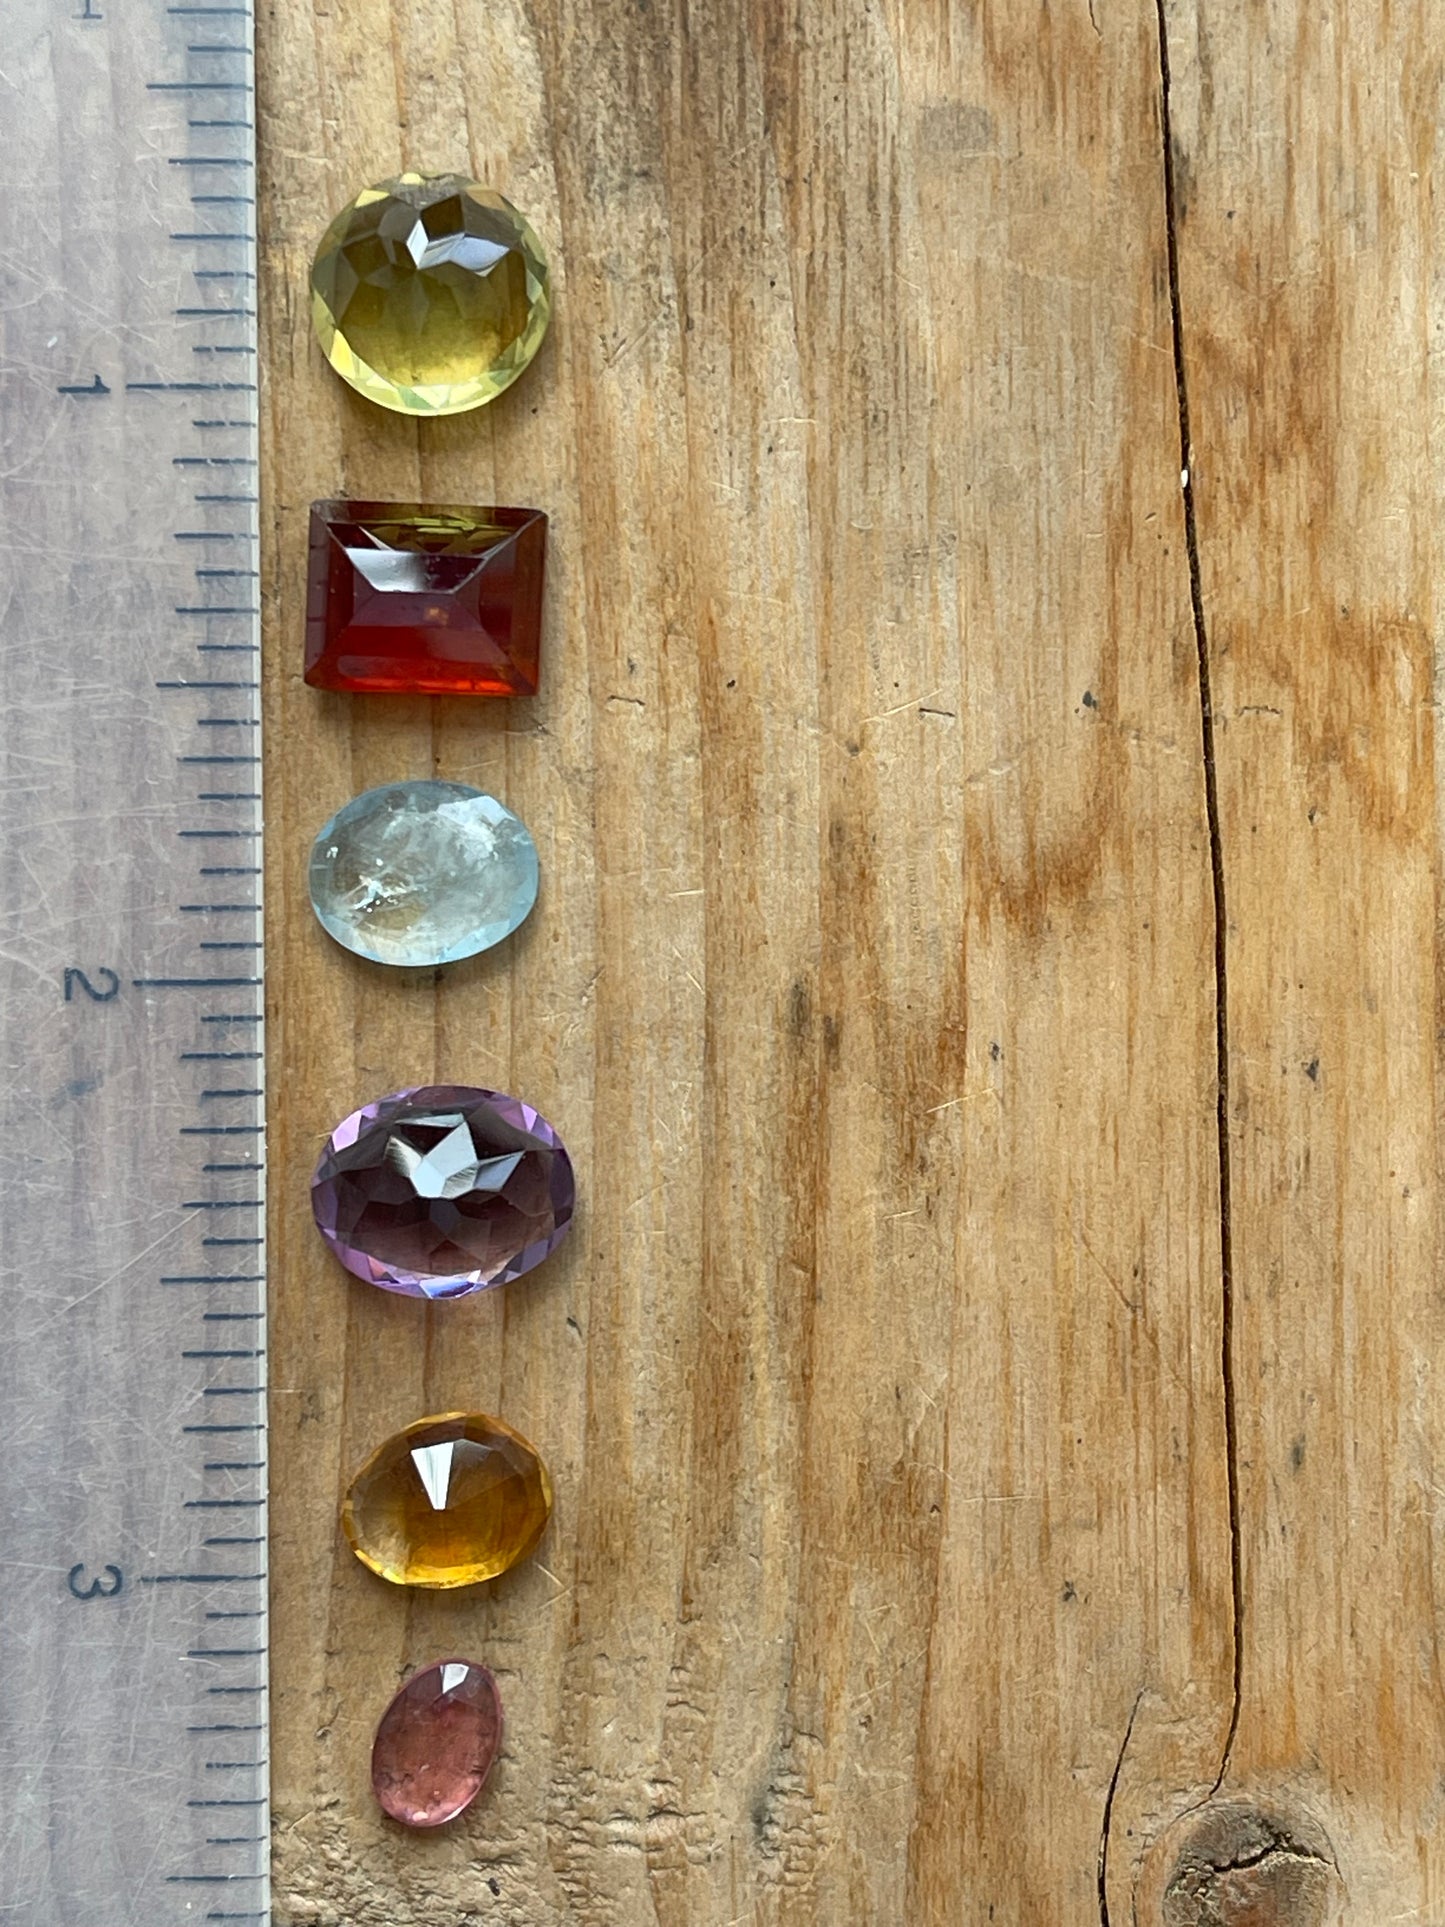 Gemstone Collection 54: Lemon Quartz, Amethyst, Rainbow Tourmaline, Hessonite, Aquamarine, Citrine - 15CT